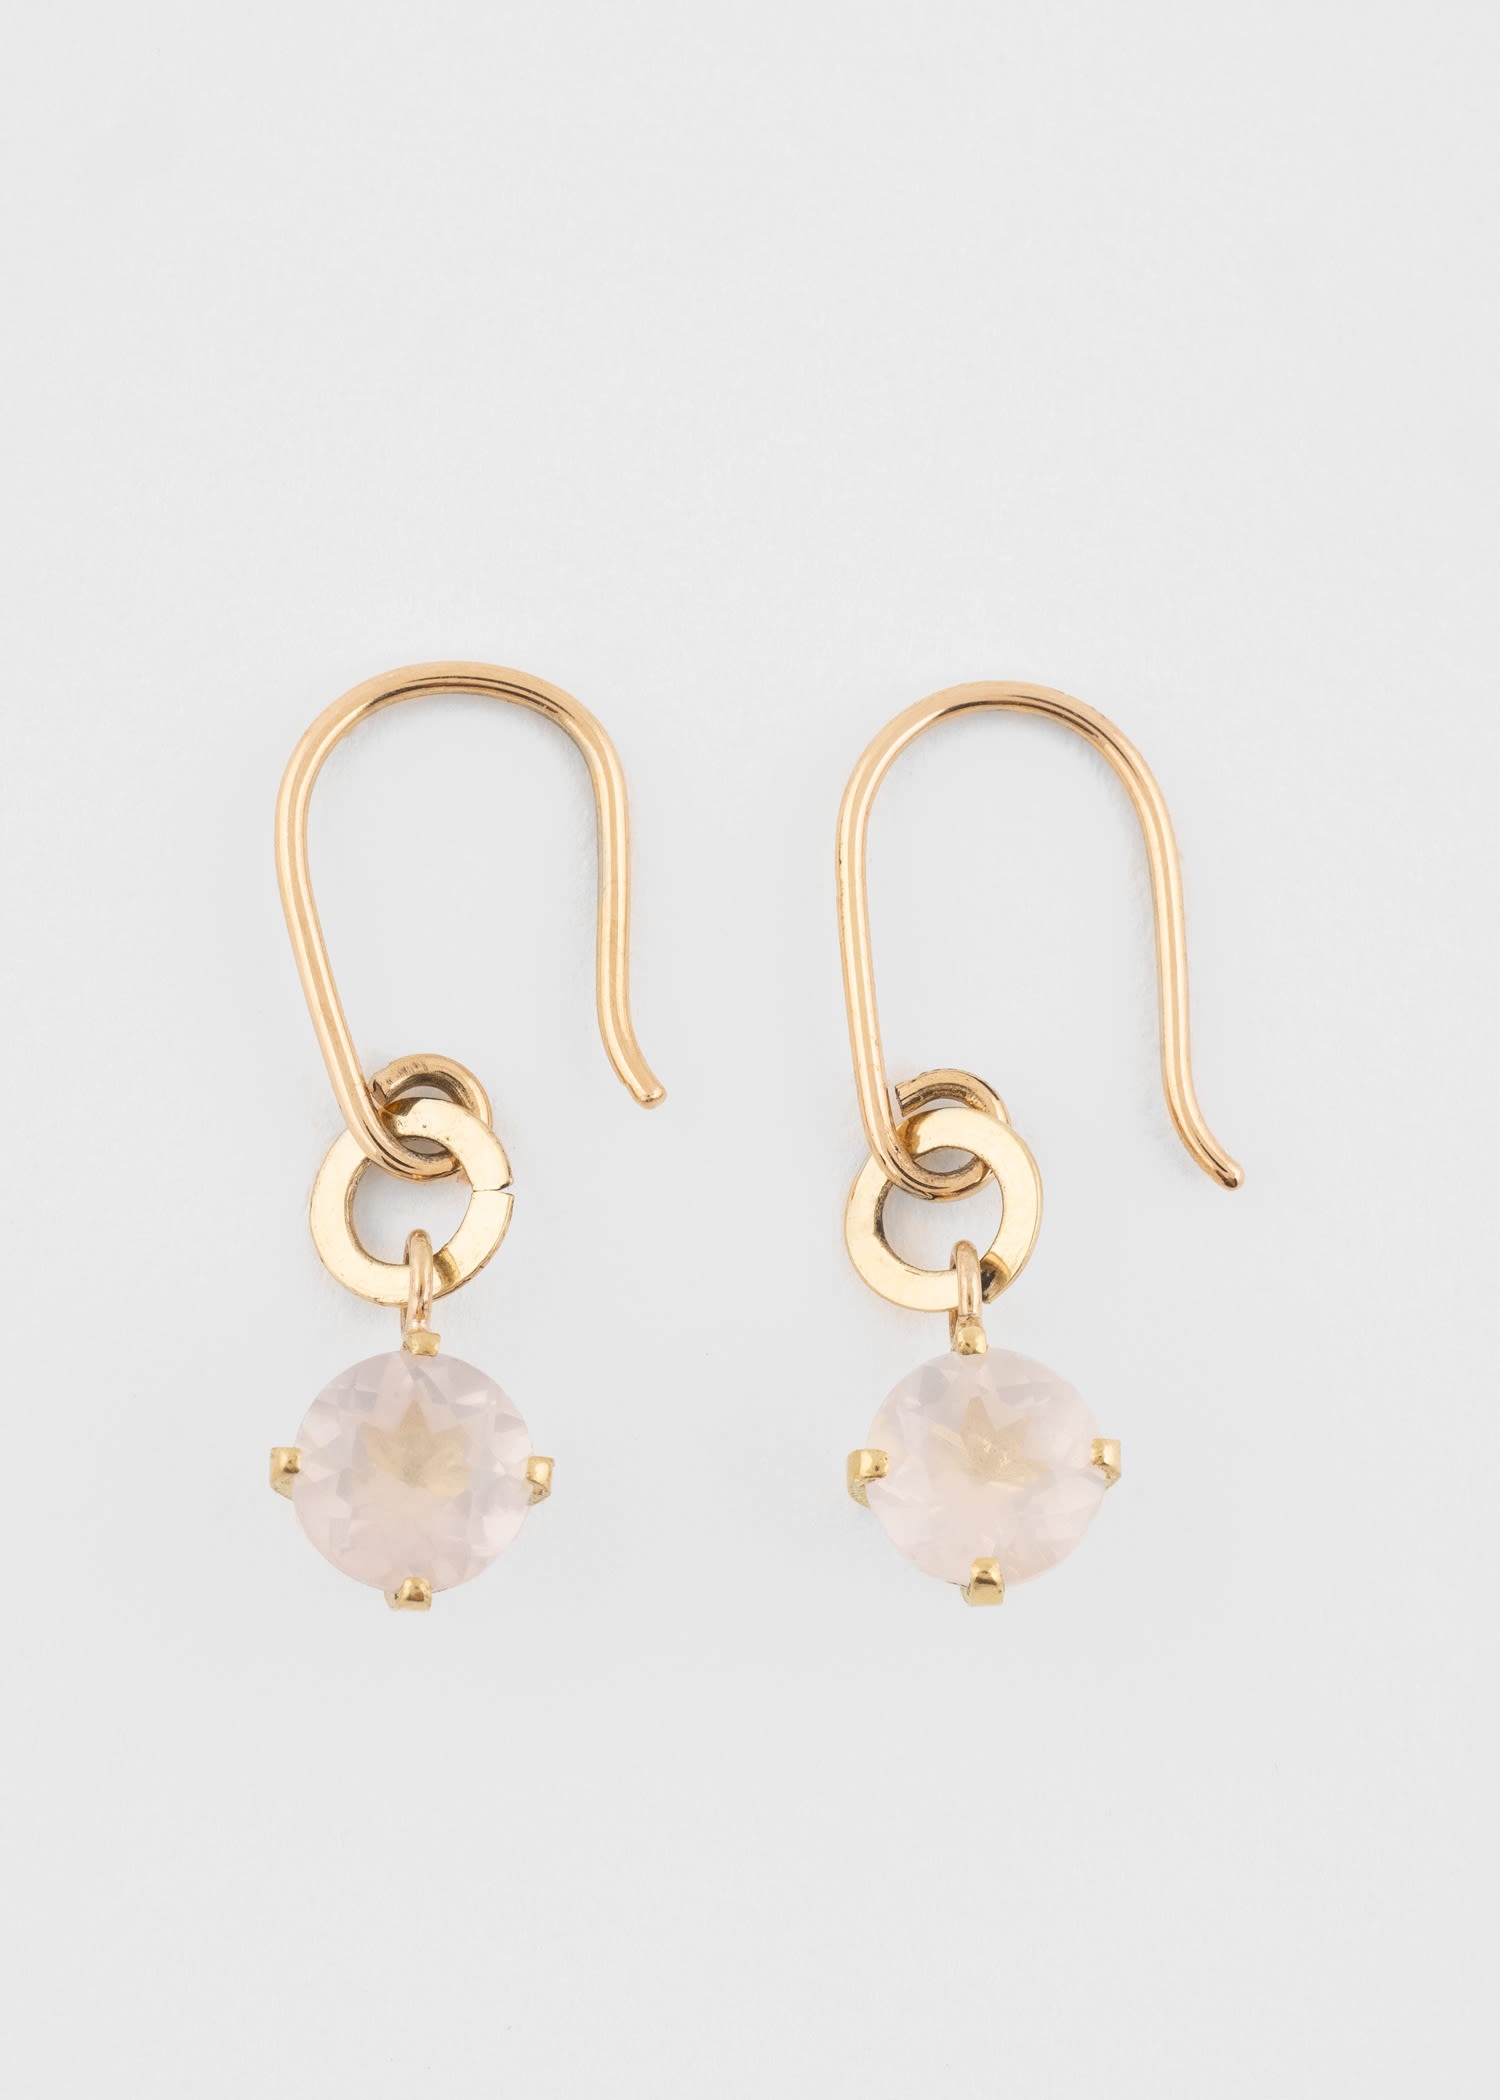 'Clara' Pink Quartz Gold Earrings by Helena Rohner - 3